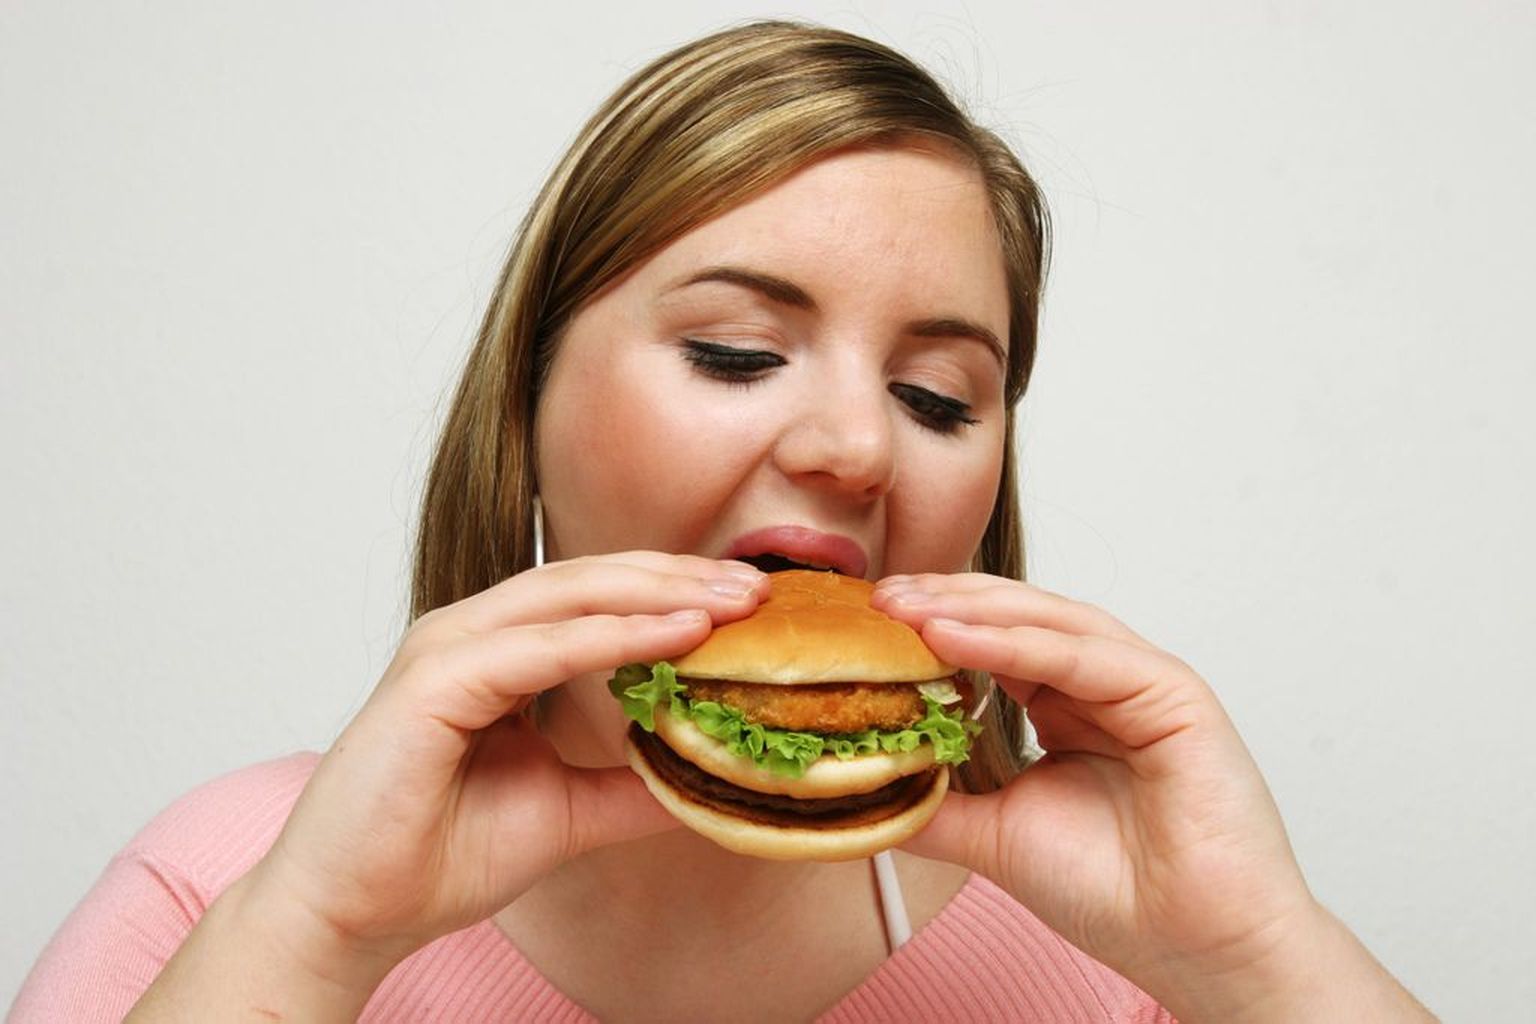 Девушка ест гамбургер. Иллюстративное фото.